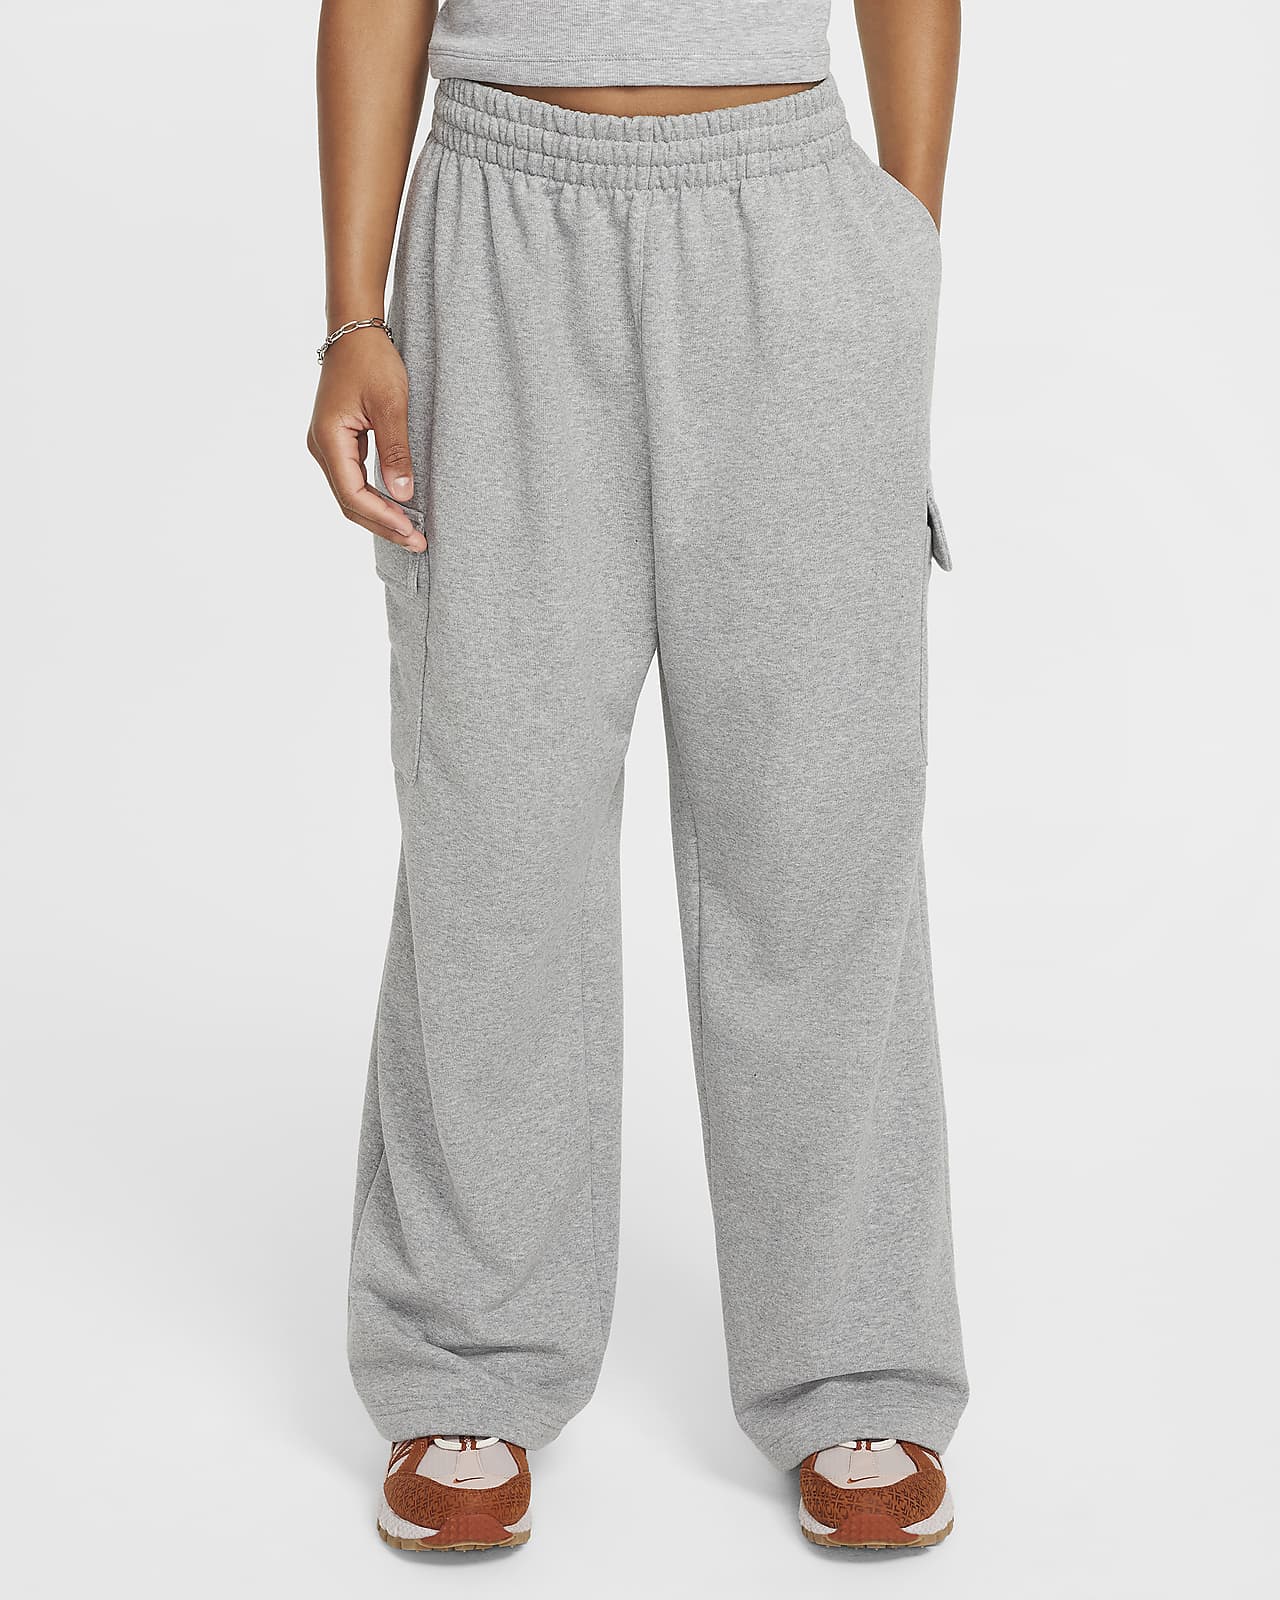 Pants de tejido Fleece Dri-FIT oversized para niña Nike Sportswear